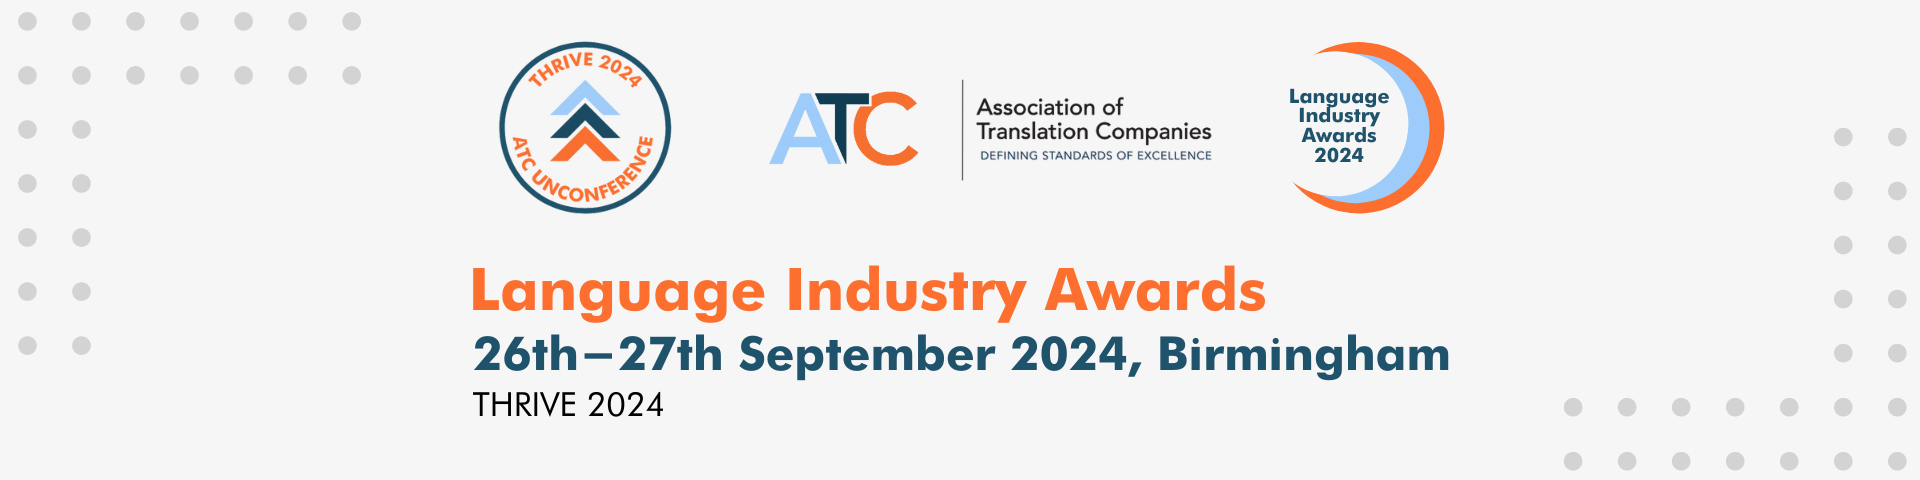 ATC Language Industry Awards 2024 Finalists